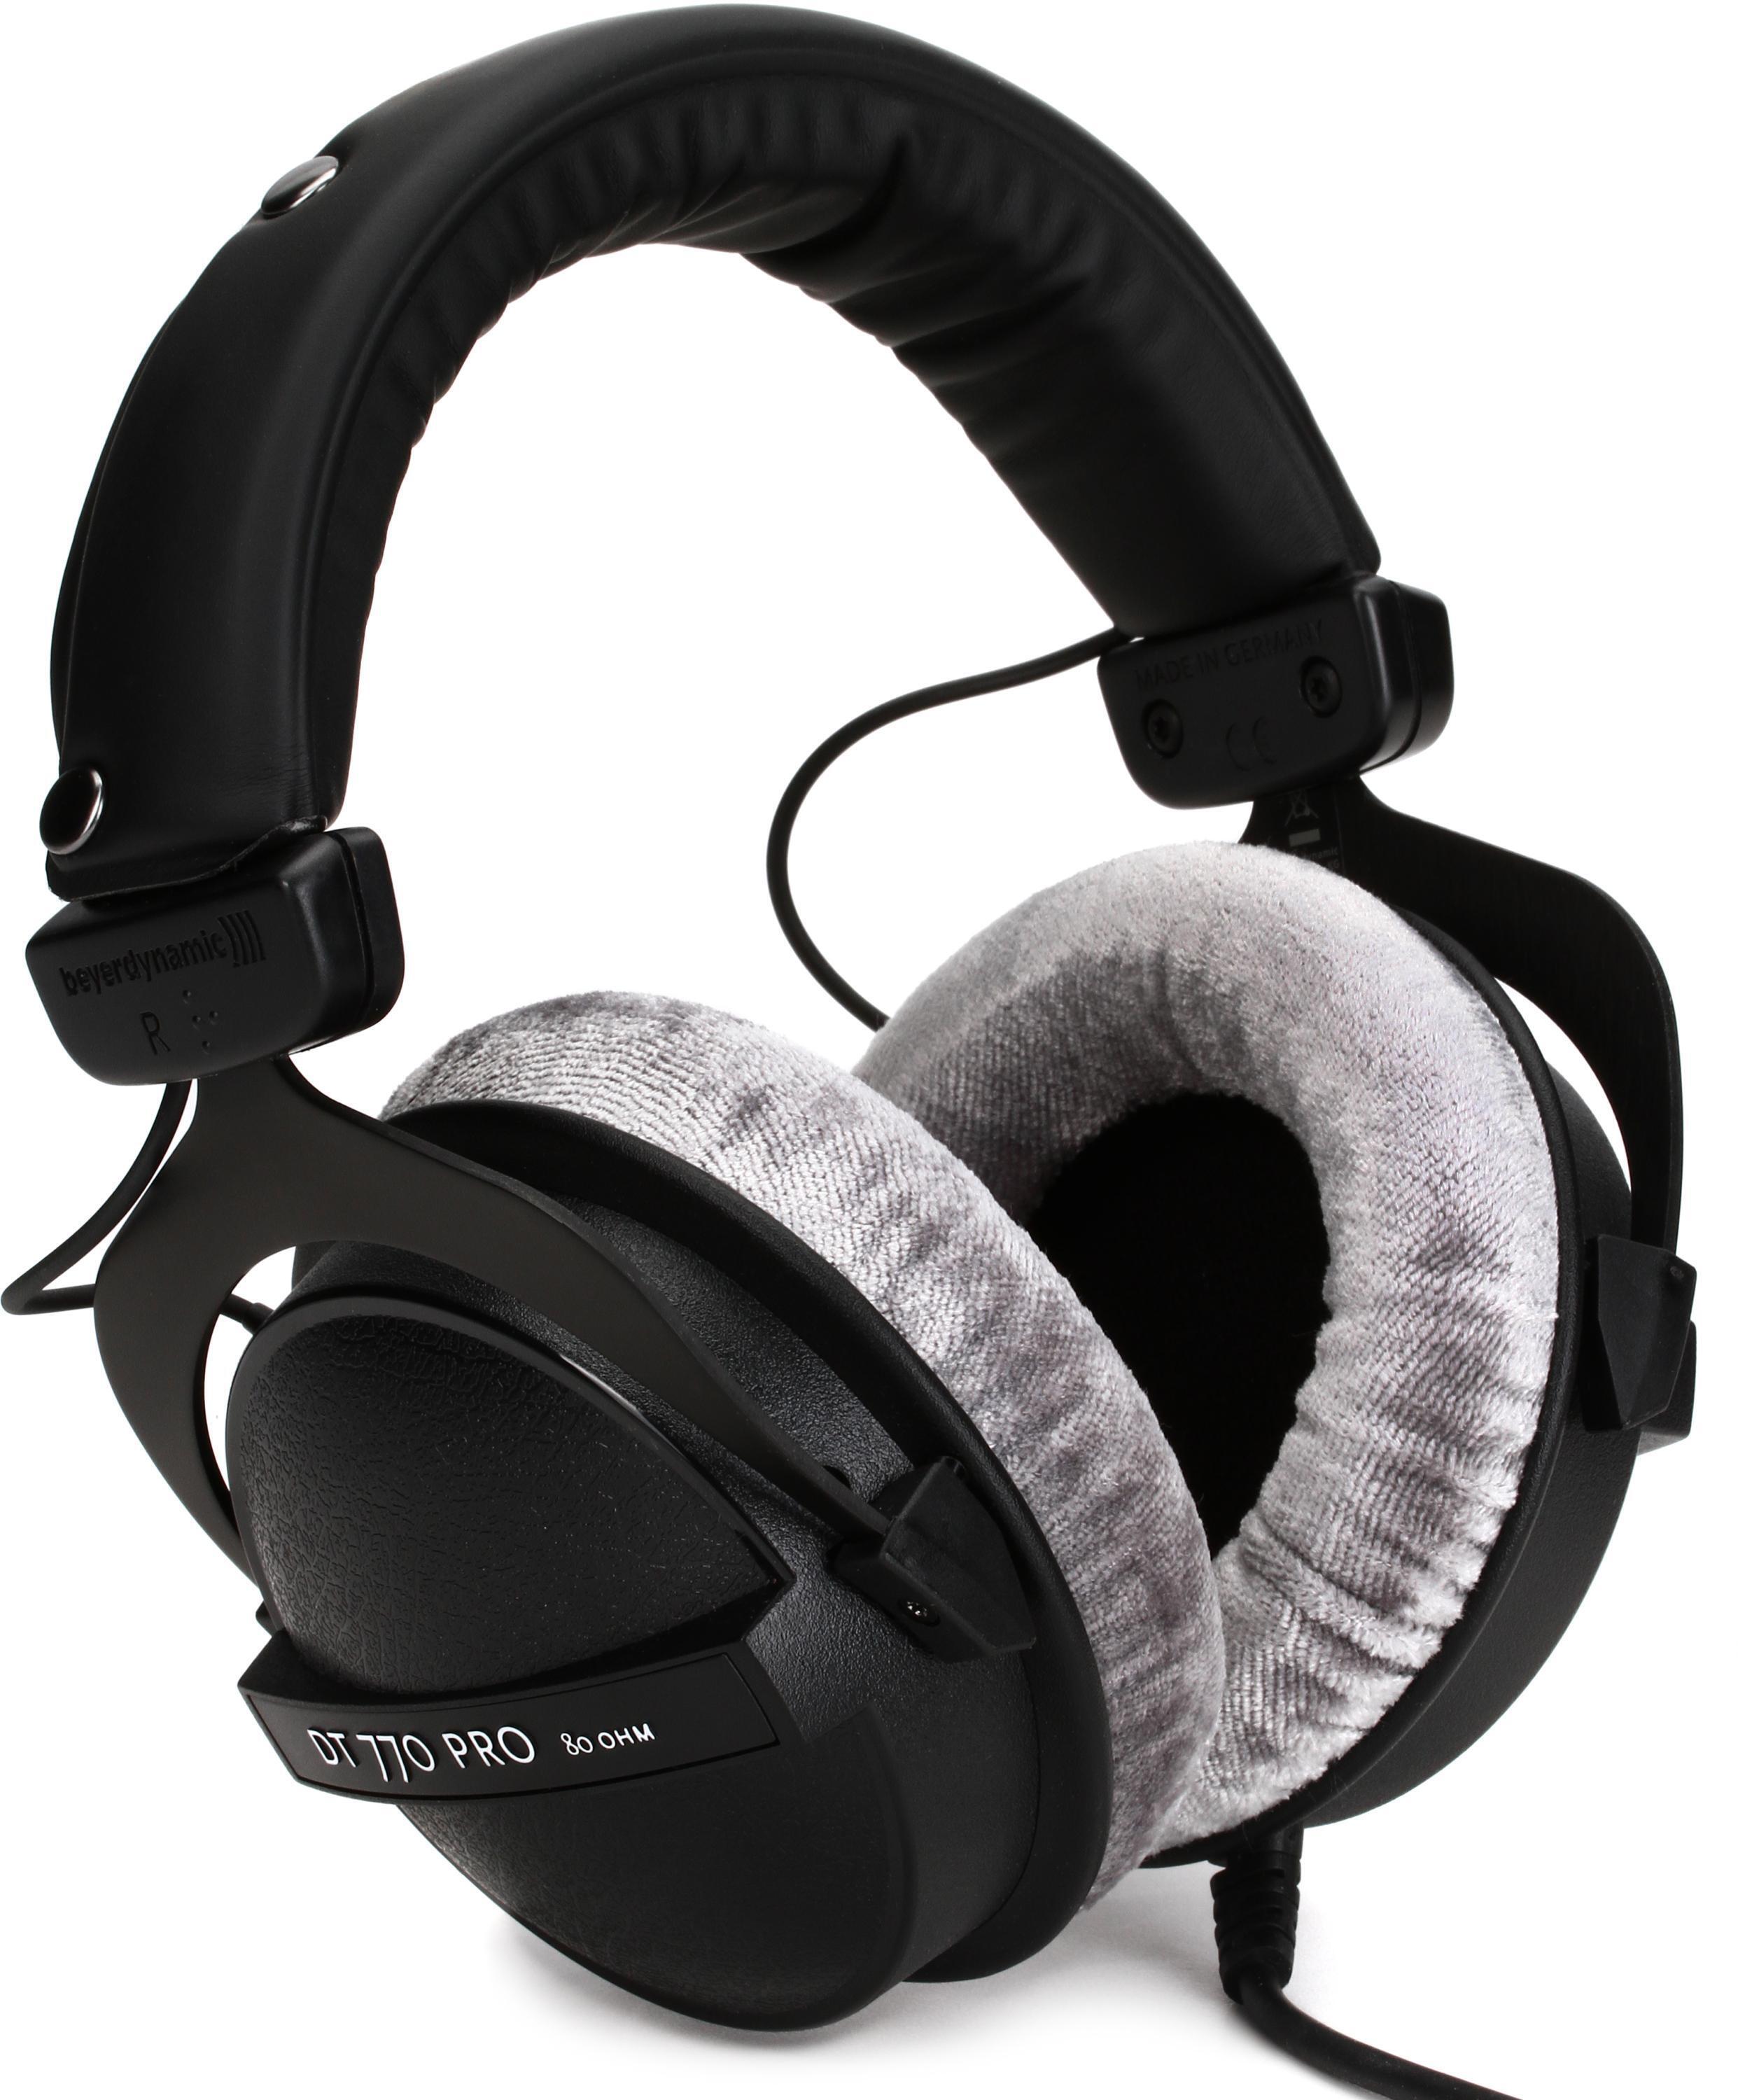 Beyerdynamic DT 770 PRO 80 Ohm Over-Ear Studio Headphones - Gray